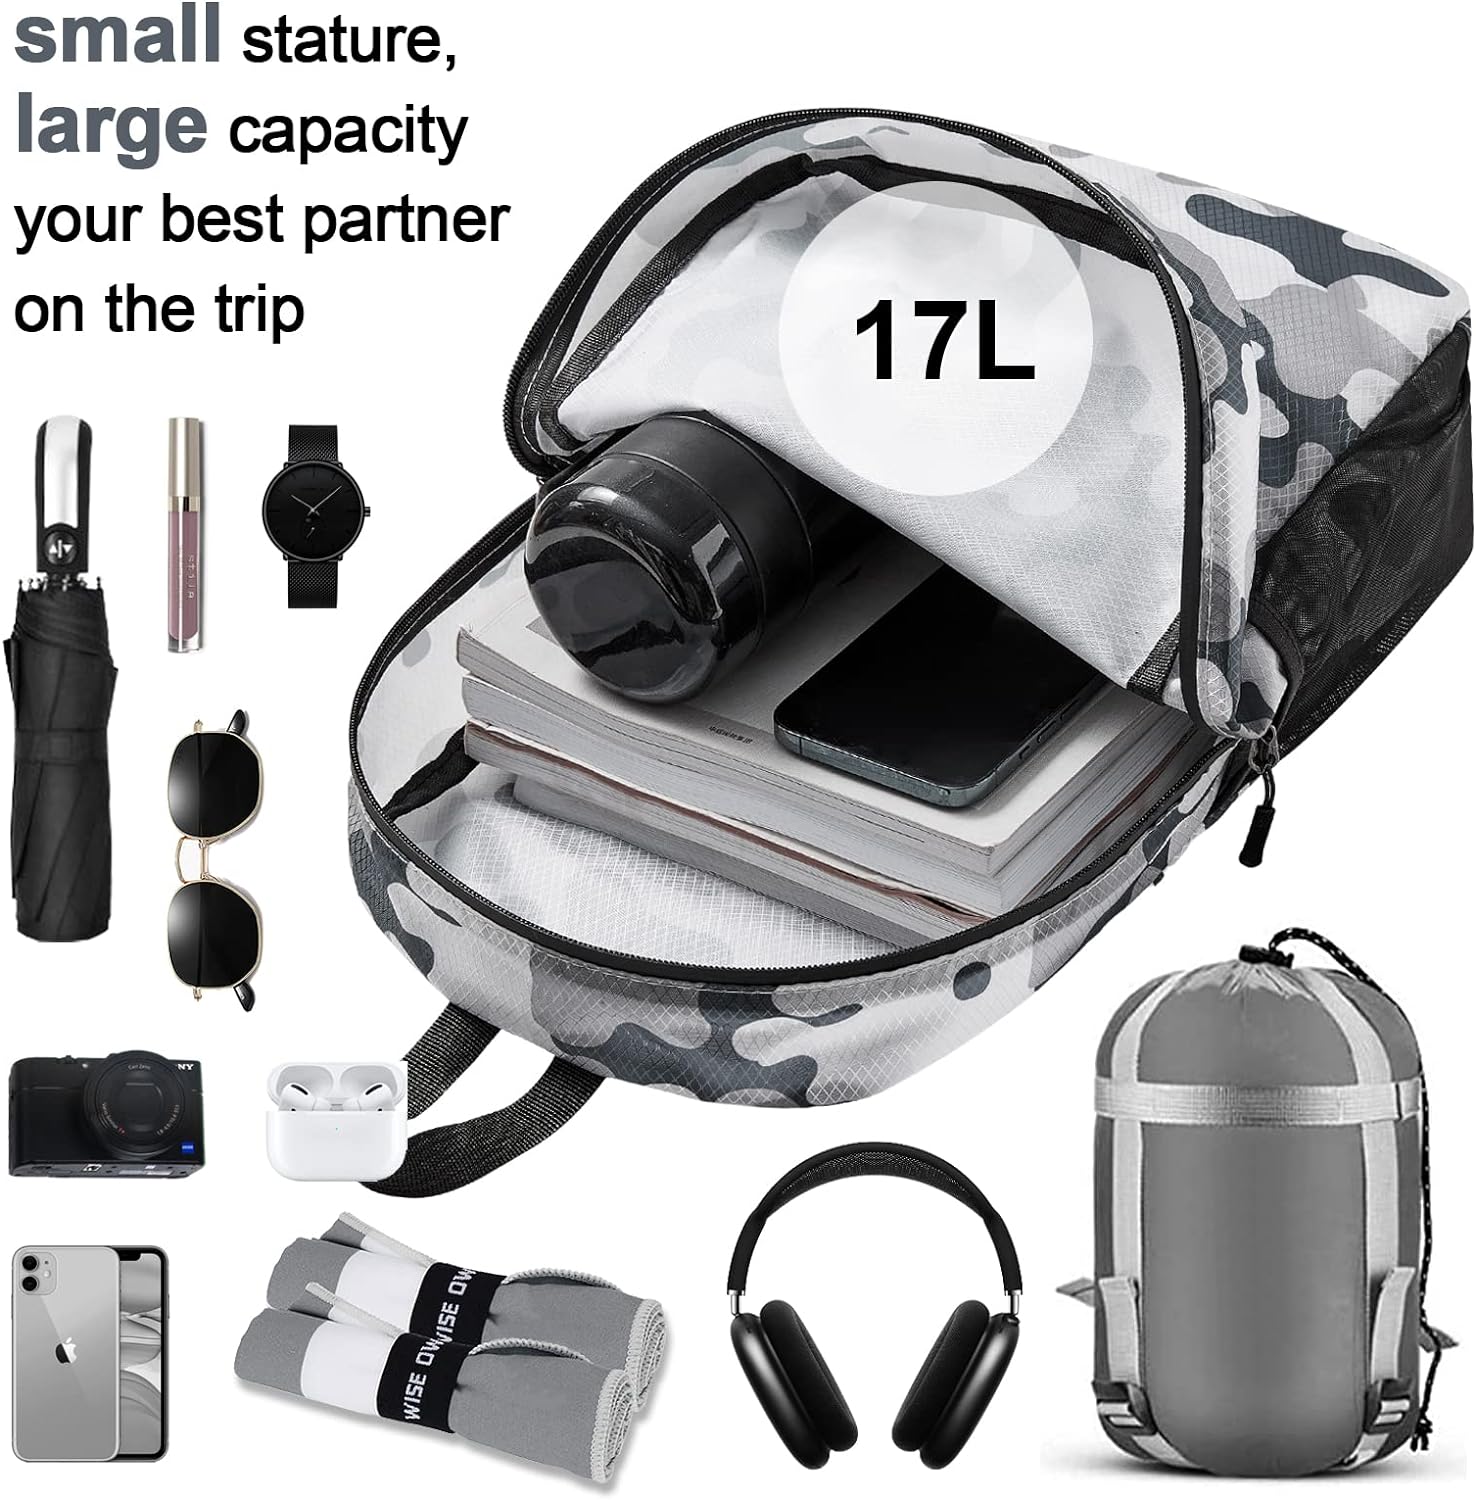 WOOMADA 17L Ultra Lightweight Packable Durable Waterproof Travel Hiking Backpack Daypack for Men Women Kids